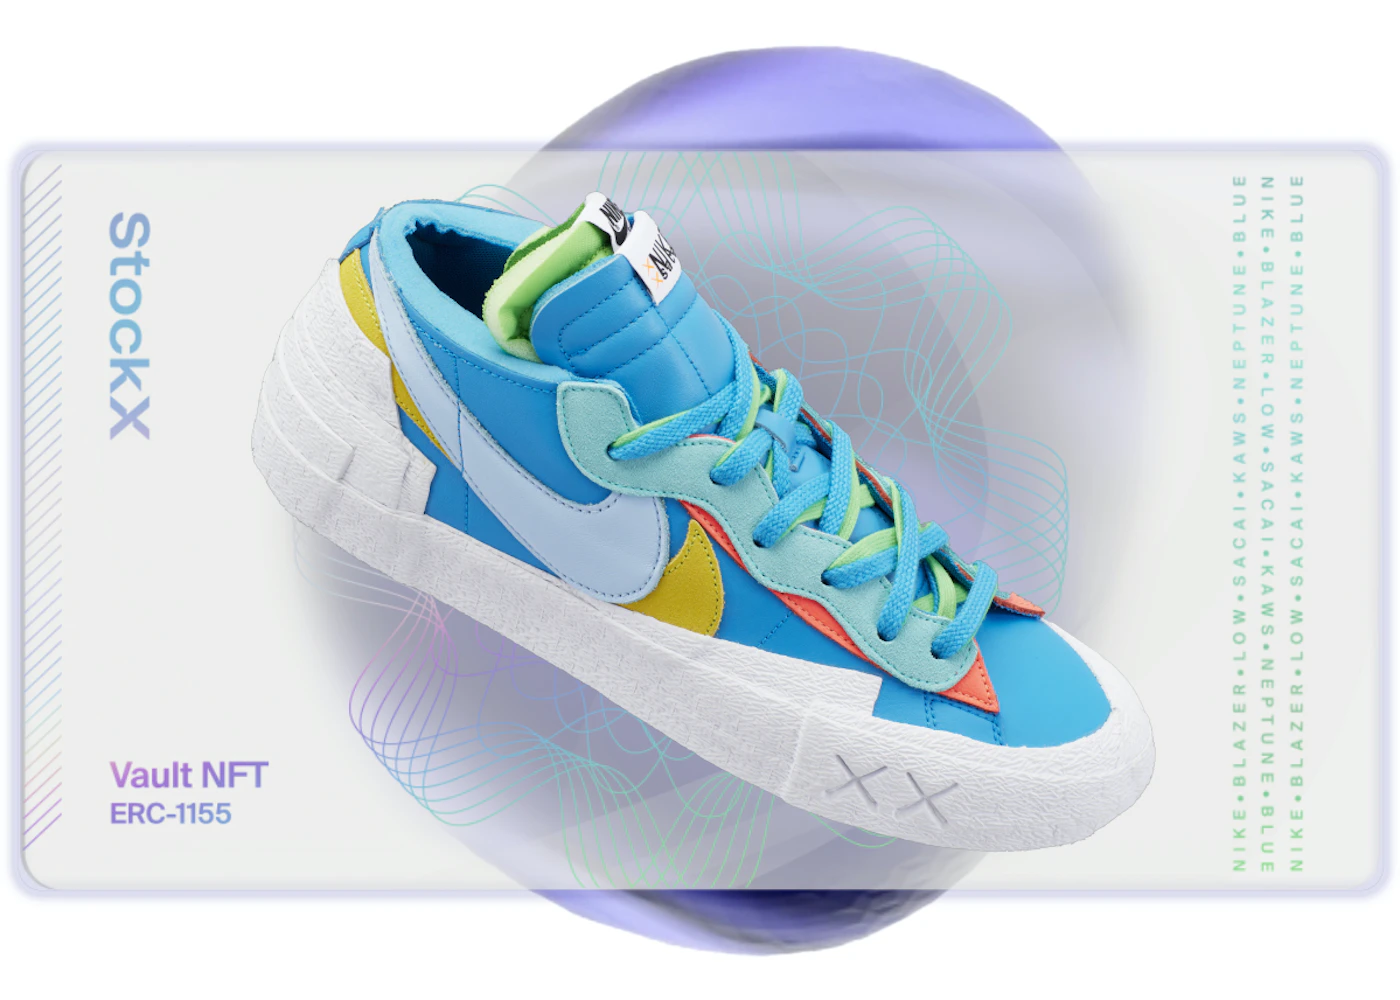 StockX Vault NFT KAWS Sacai Nike Blazer Low Blue - US M 10 Vaulted Goods